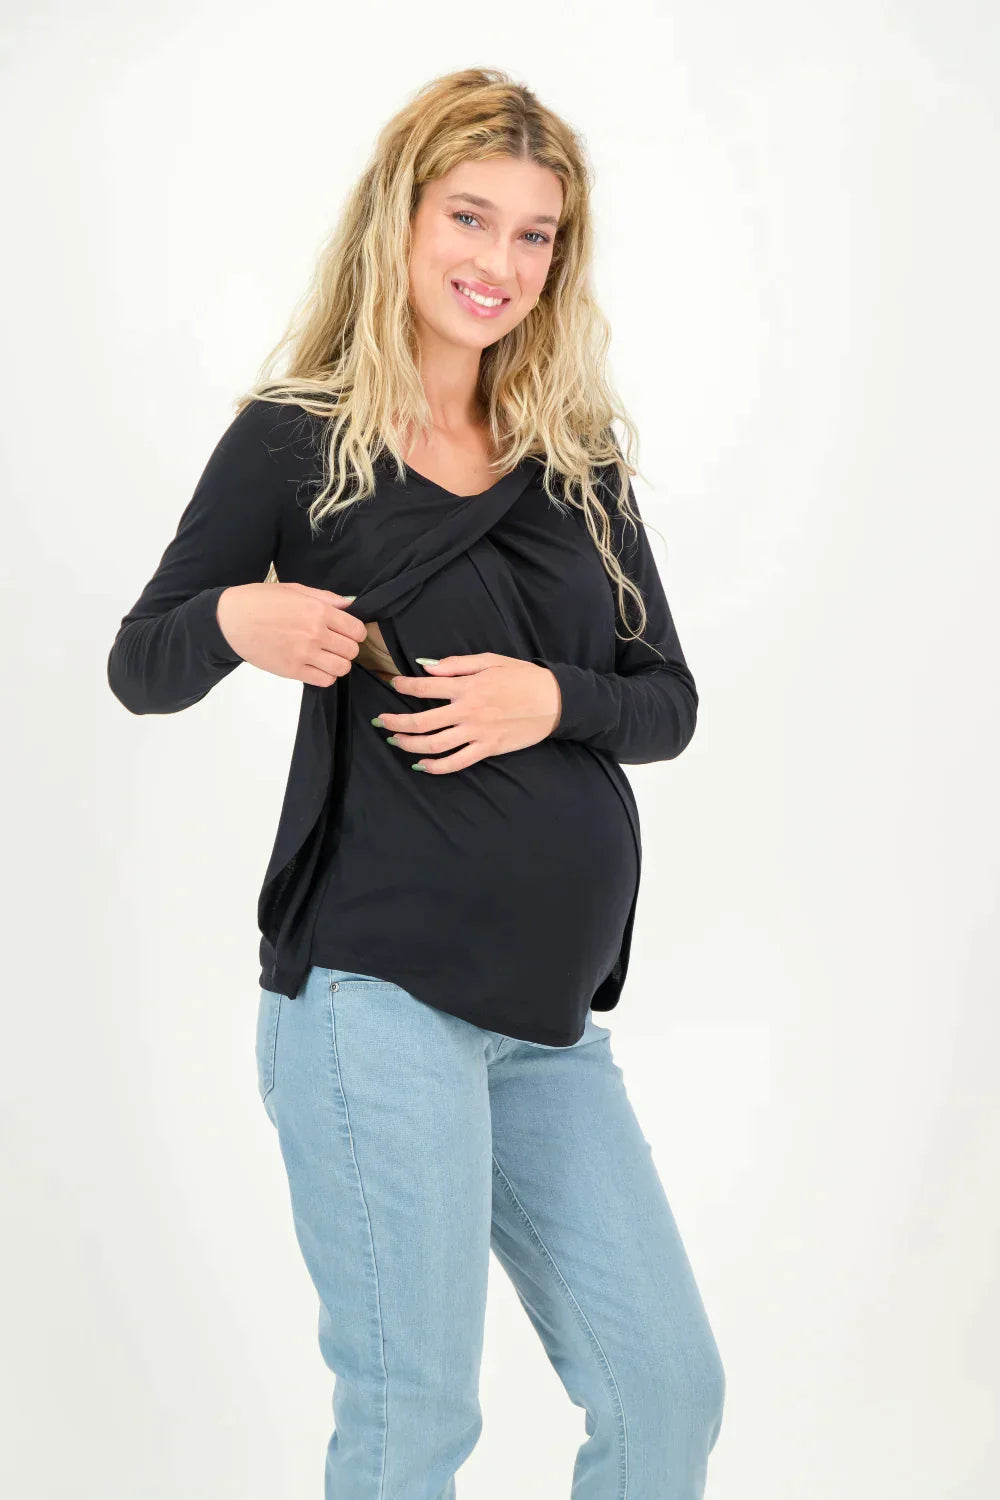 Overlay Feeding Top Maternity Top from Cherry Melon maternity online store brisbane sydney perth australia